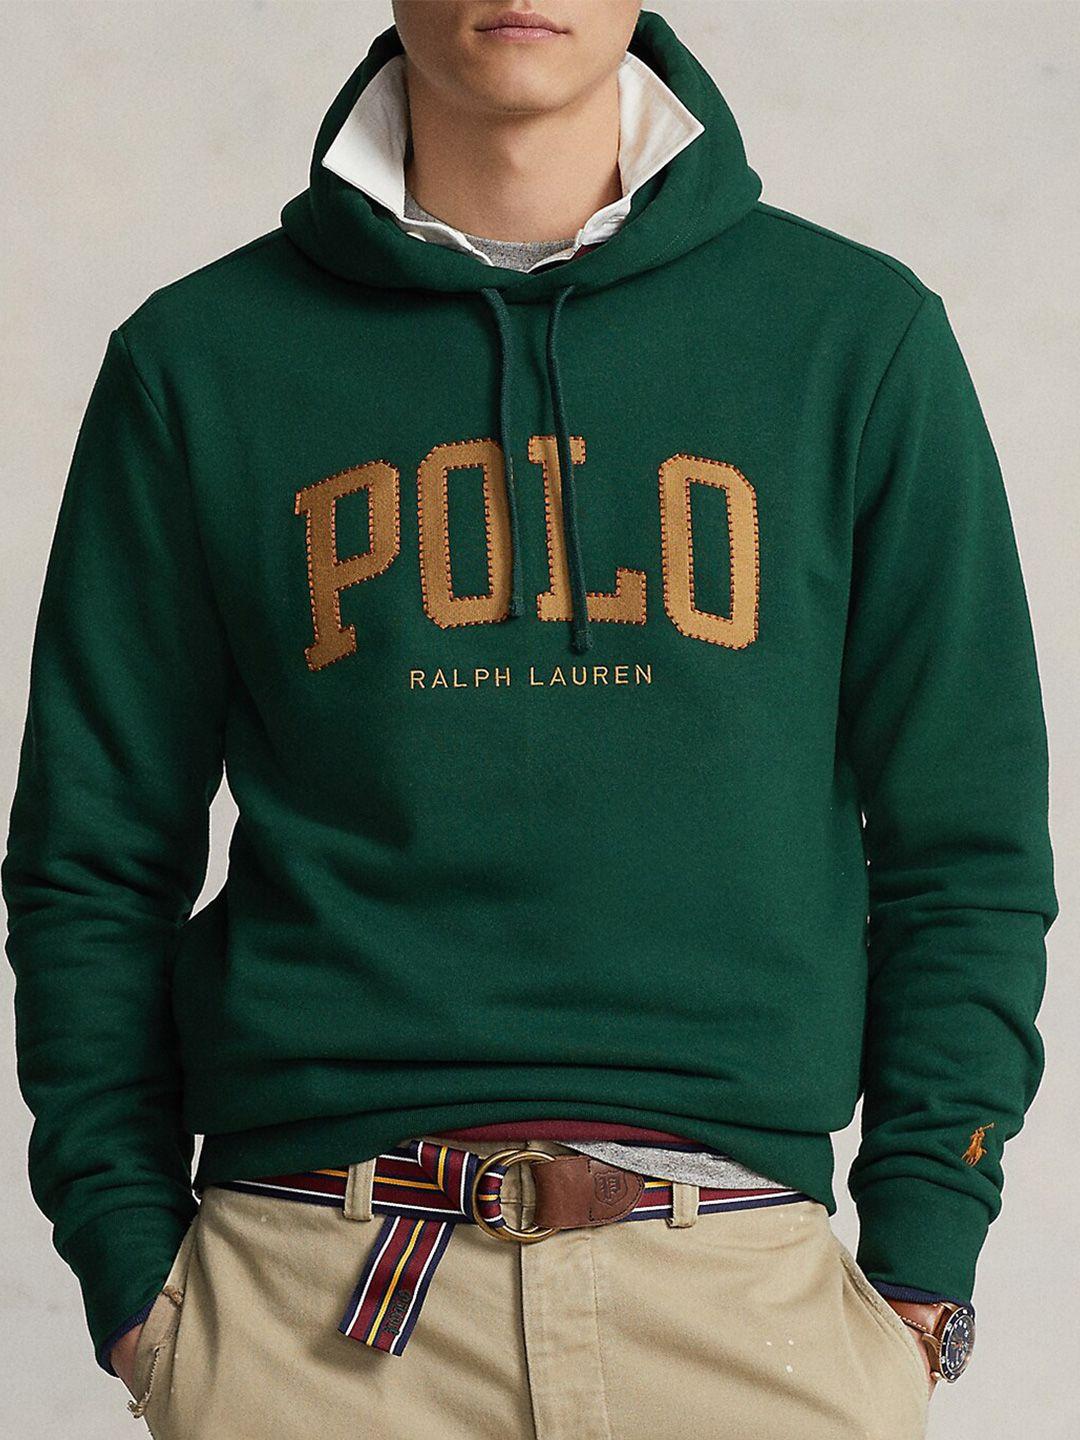 polo ralph lauren logo printed hooded fleece pullover